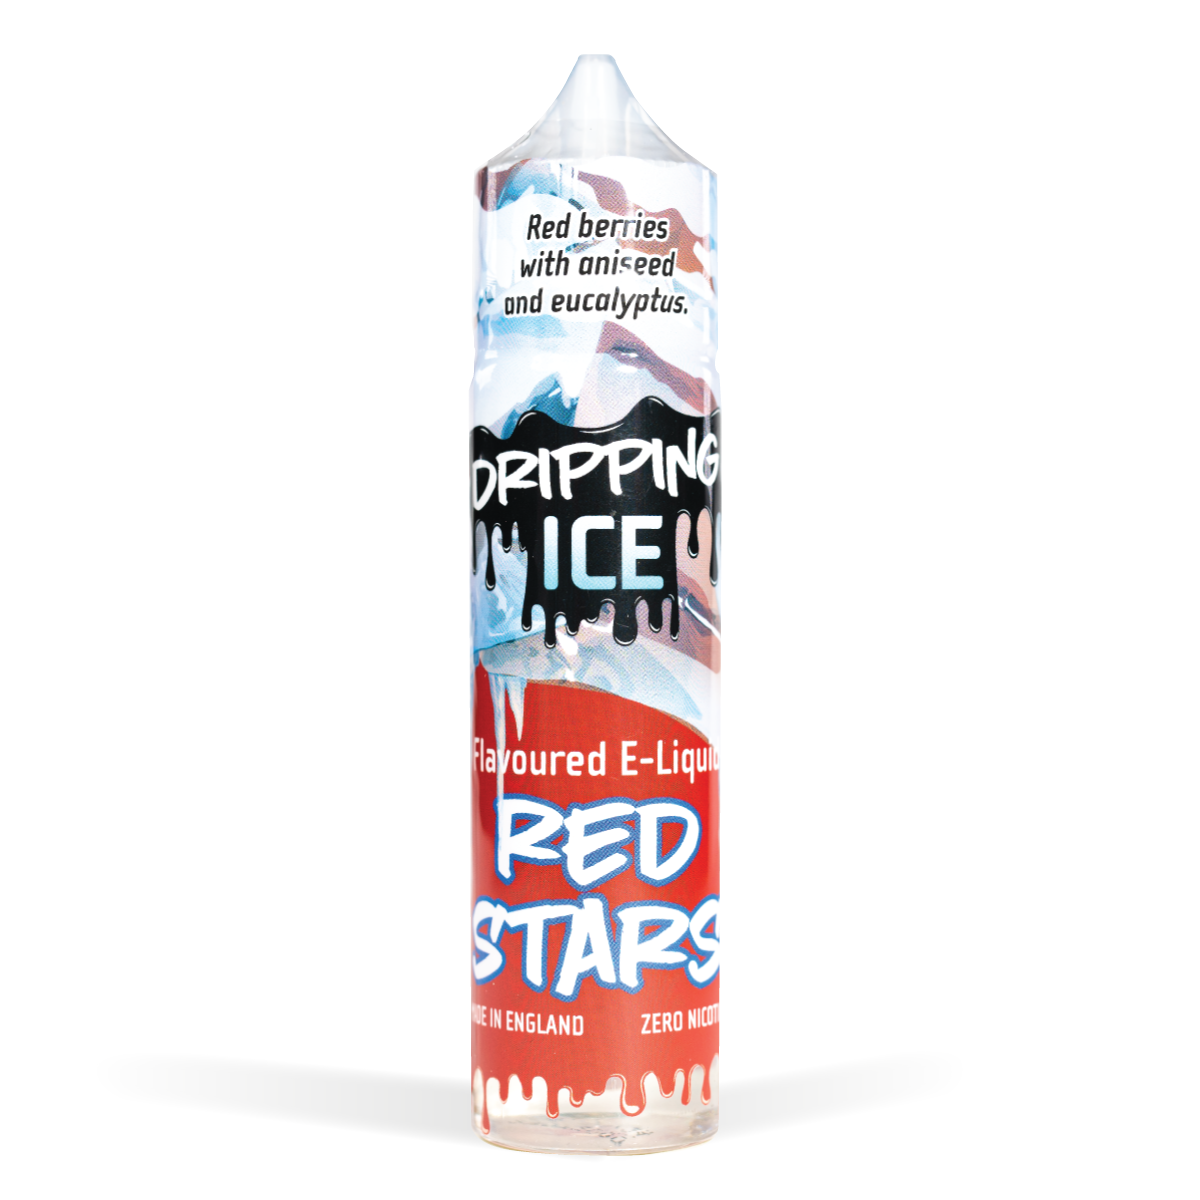 Eco vape Dripping range Red Stars Flavour 50ml Shortfill